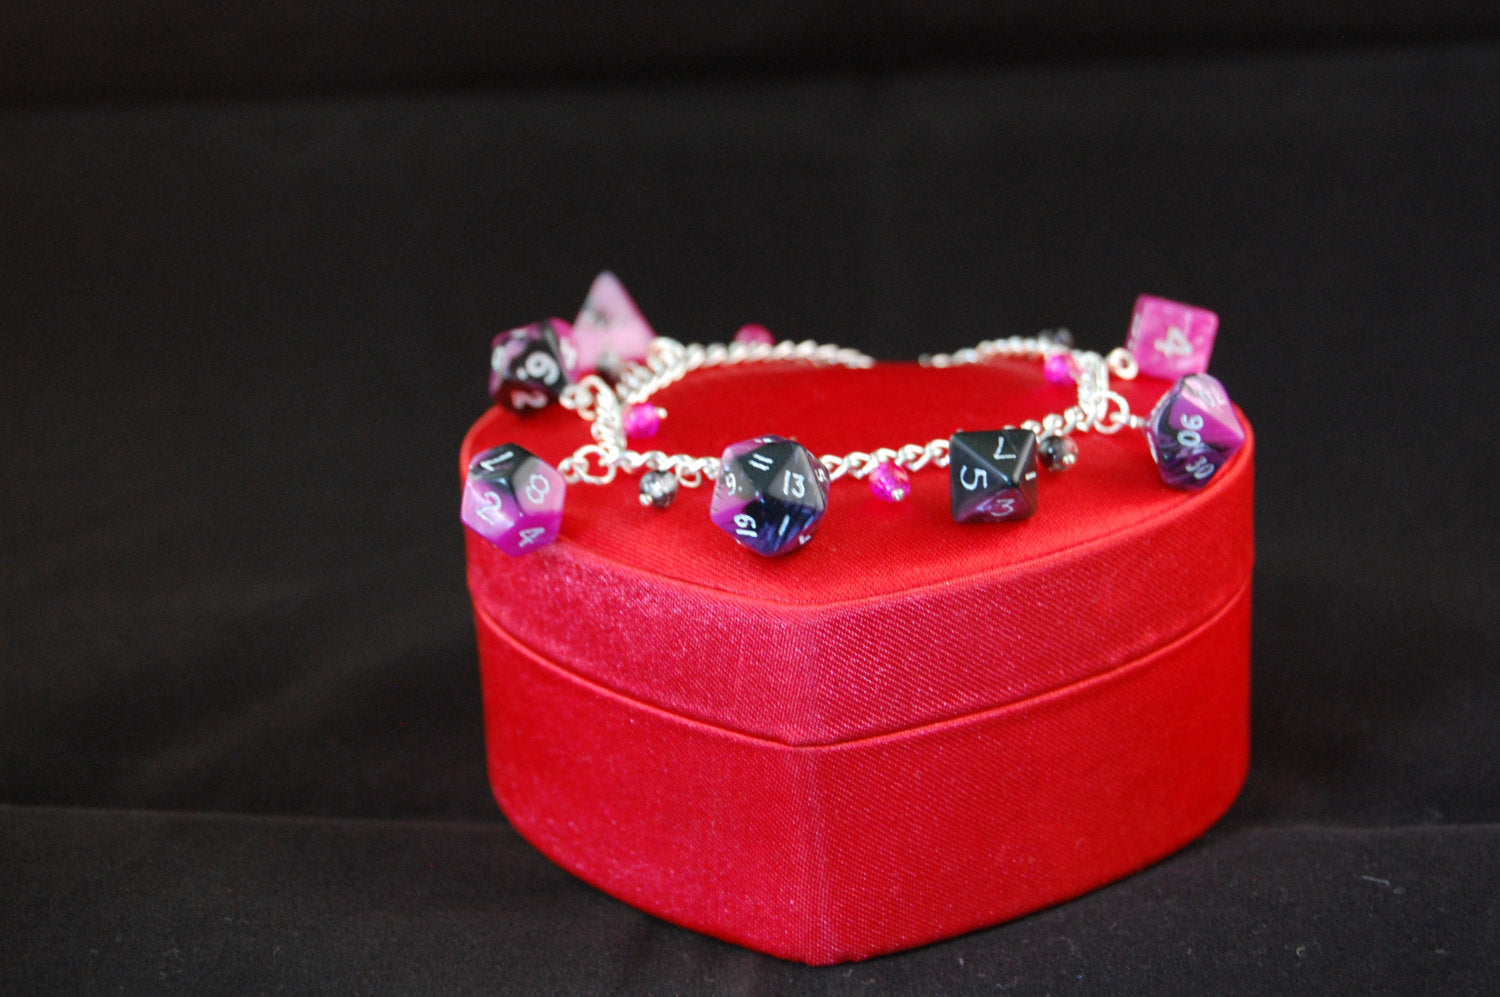 Fallout Pink/Black Mini Polyhedral Dice Charm Bracelet – Miss Moonshines  Makes